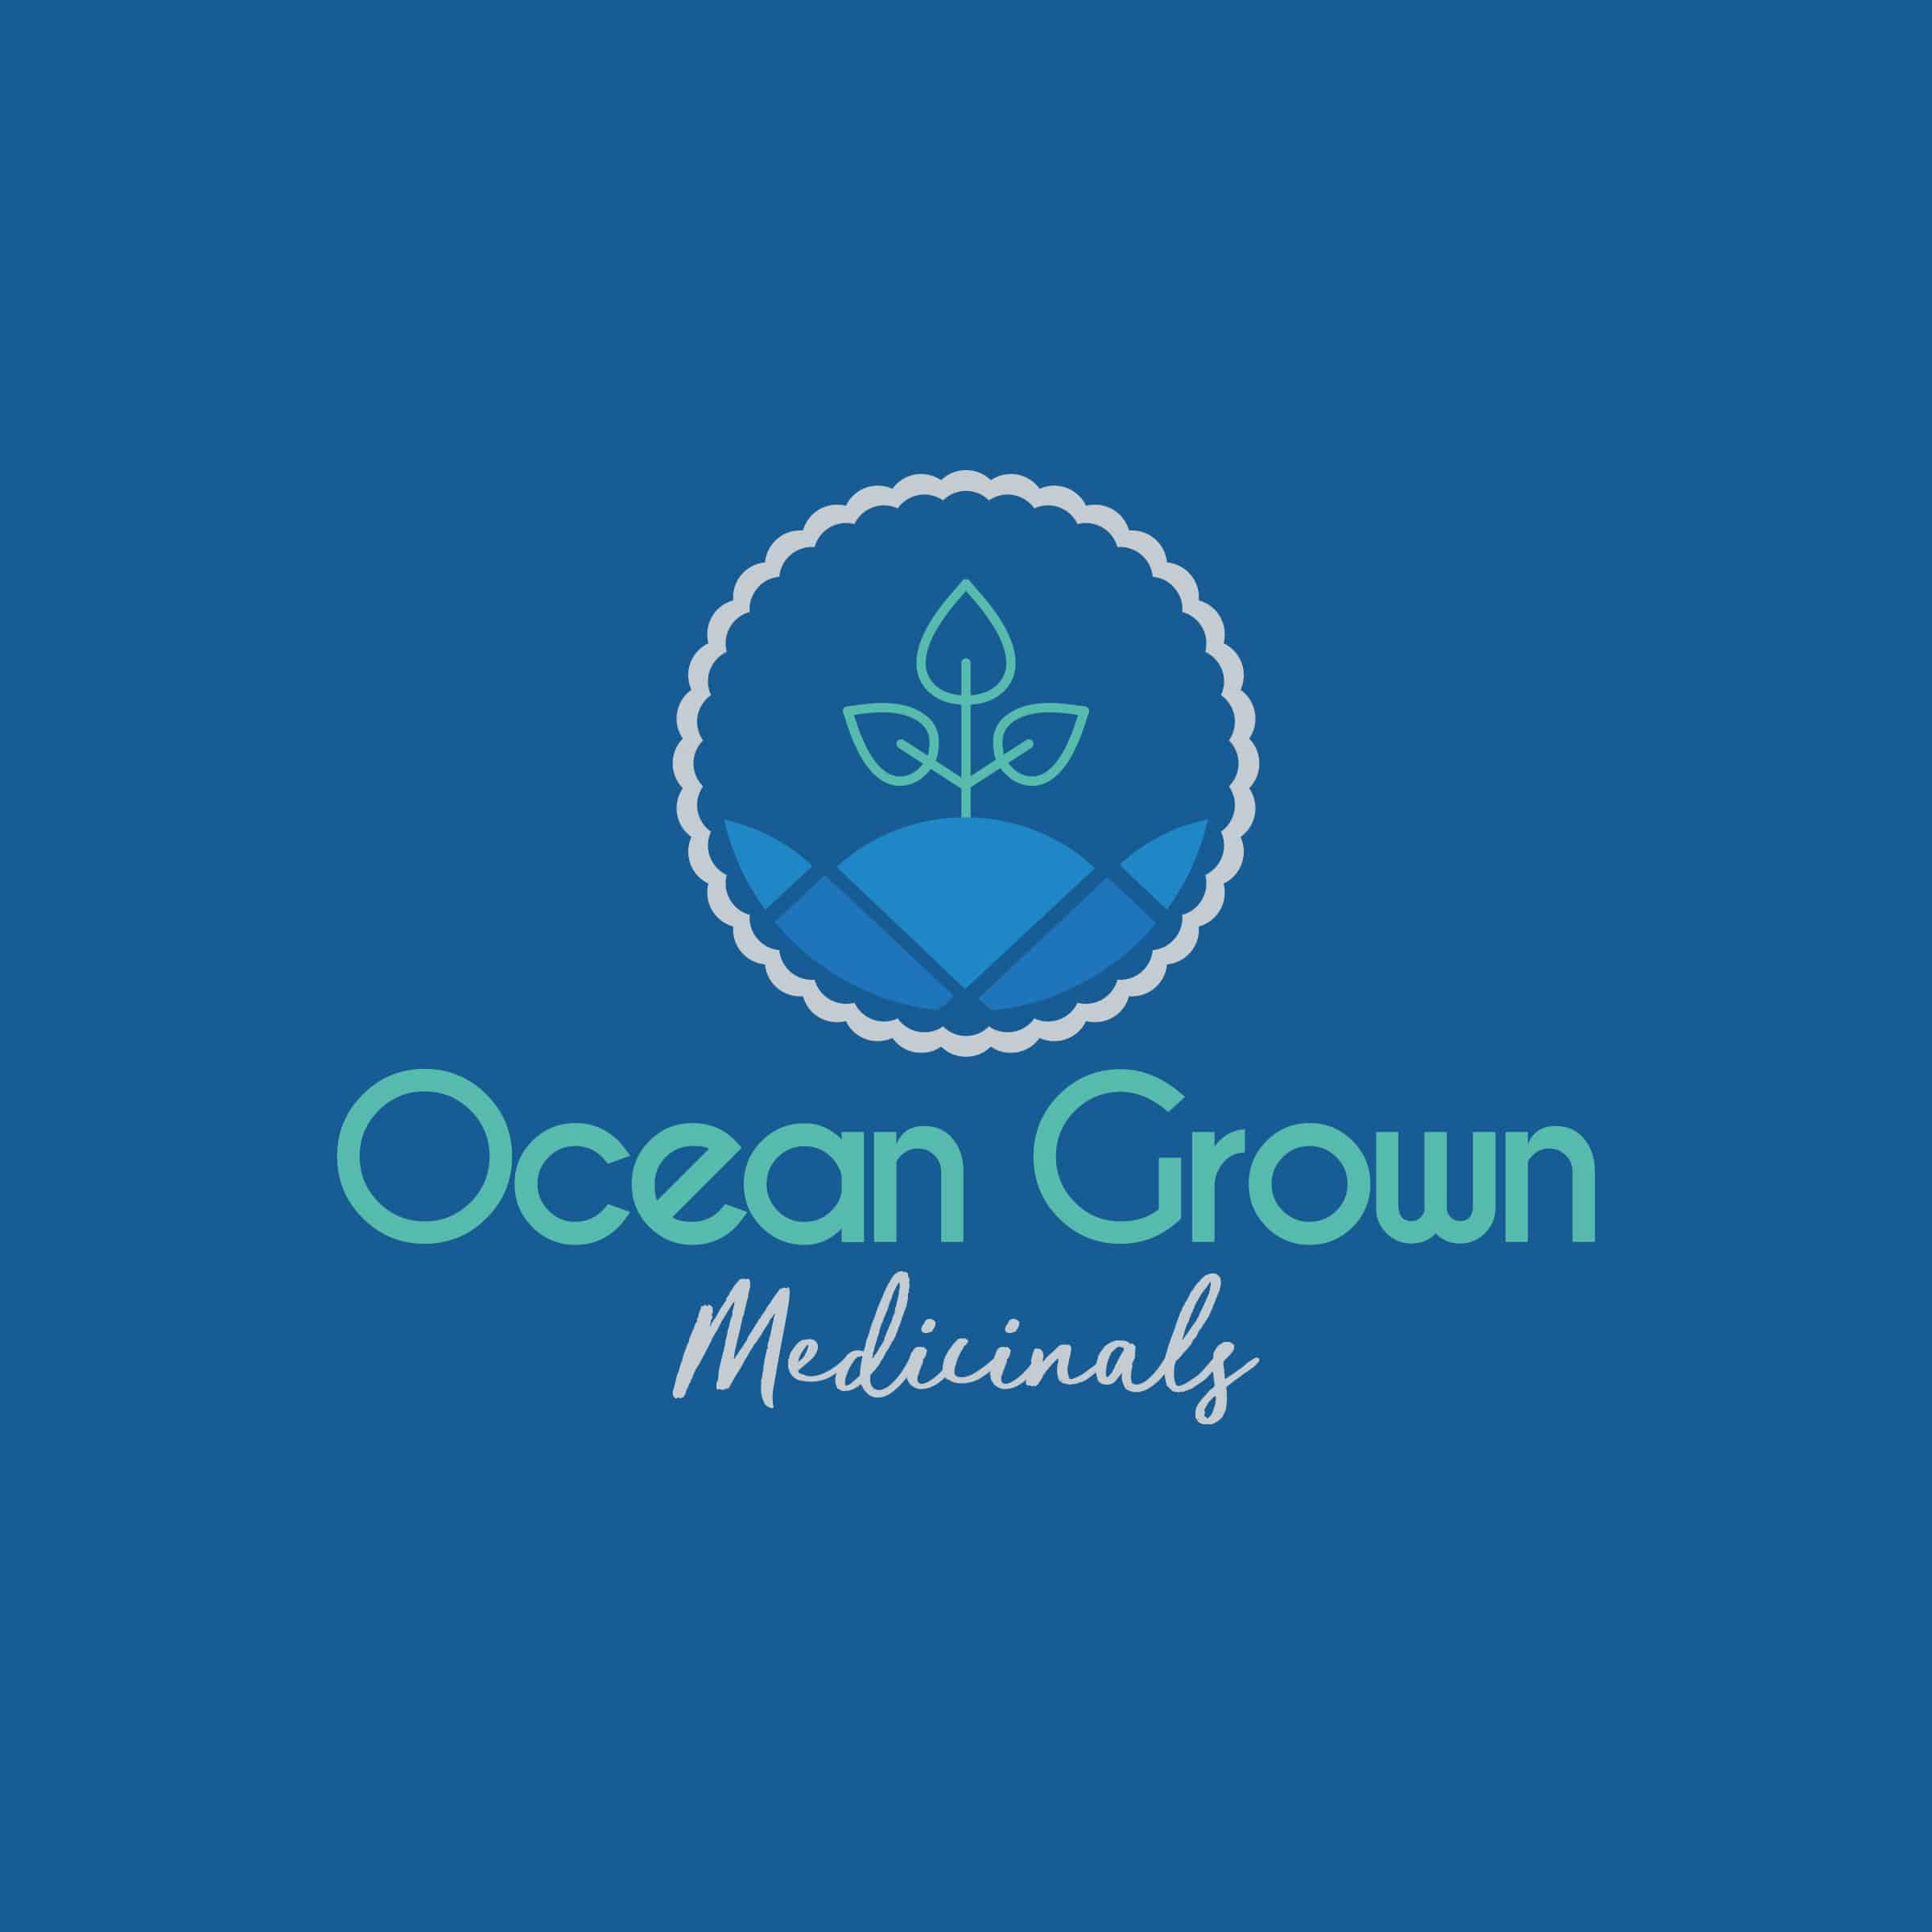 Logo design and branding for Ocean Grown Medicinals.